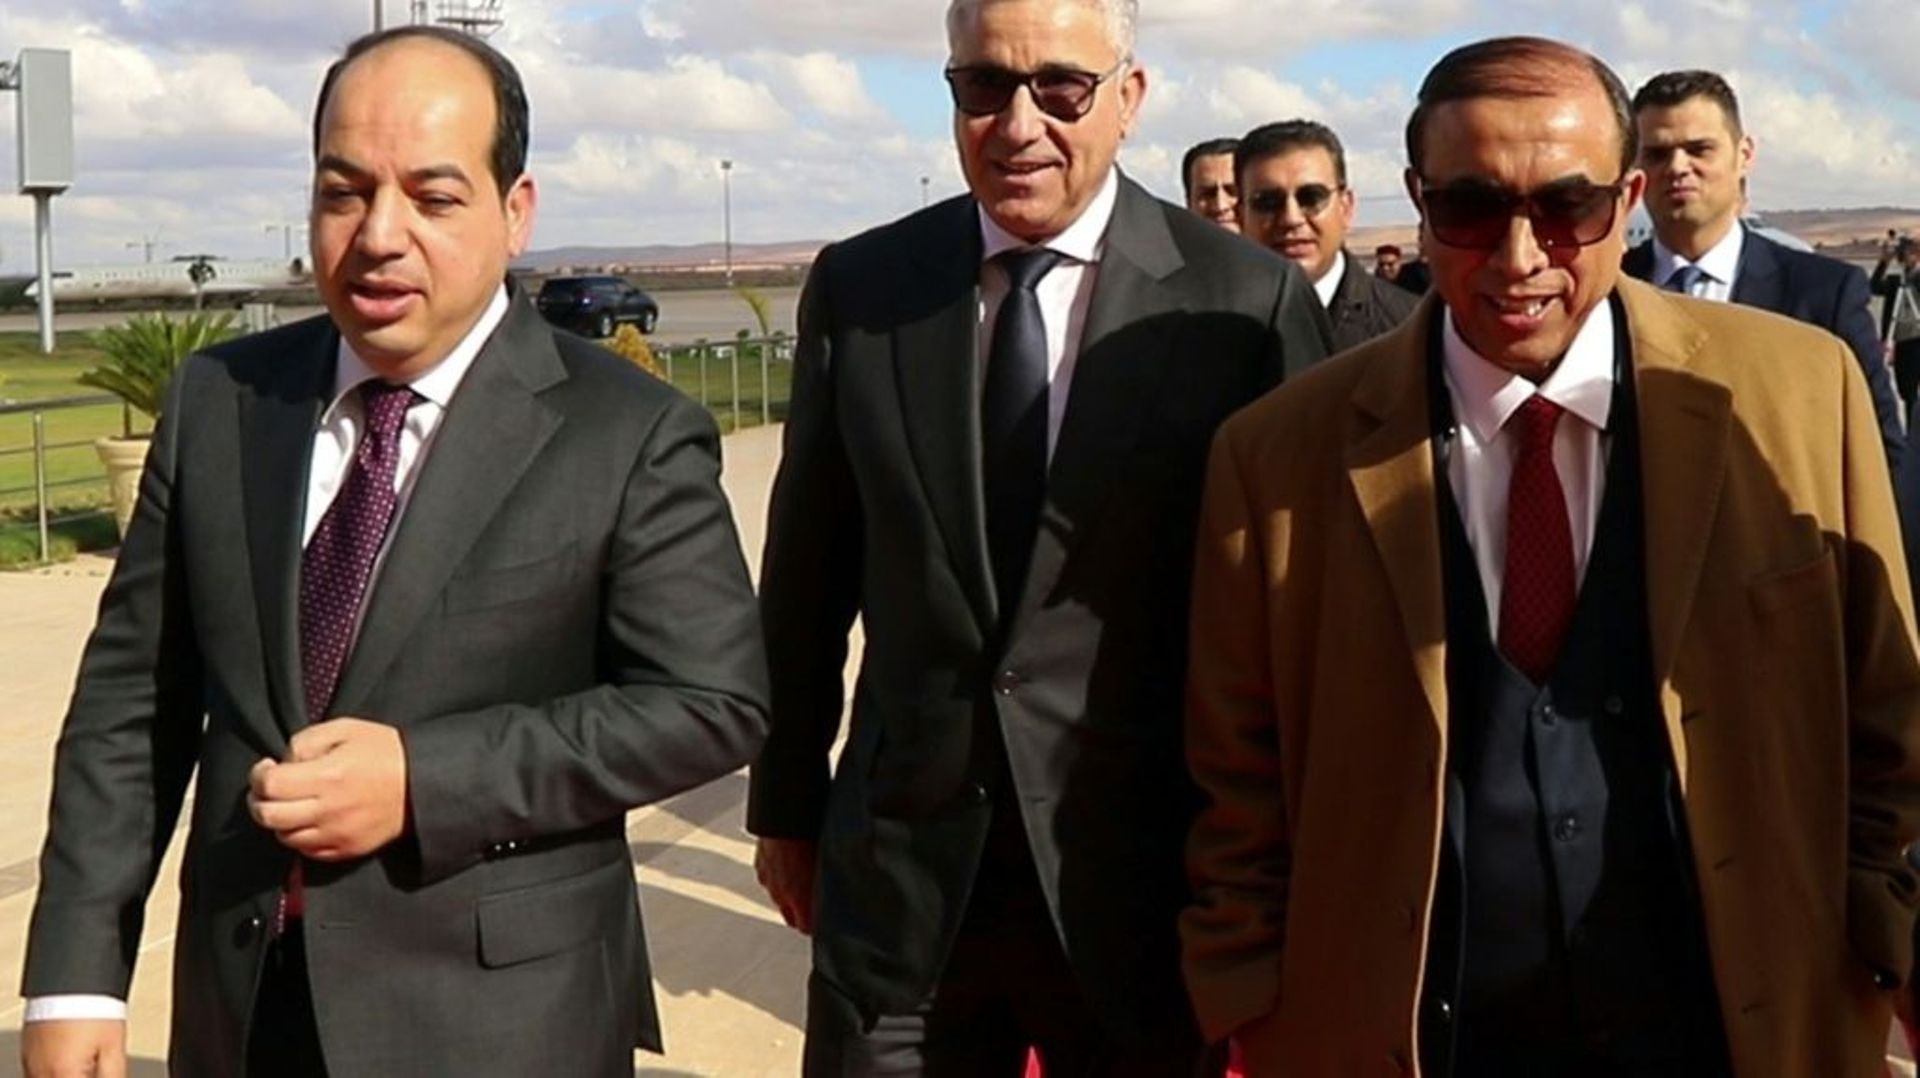 libye-deploiement-d-hommes-armes-a-tripoli-tractations-entre-candidats